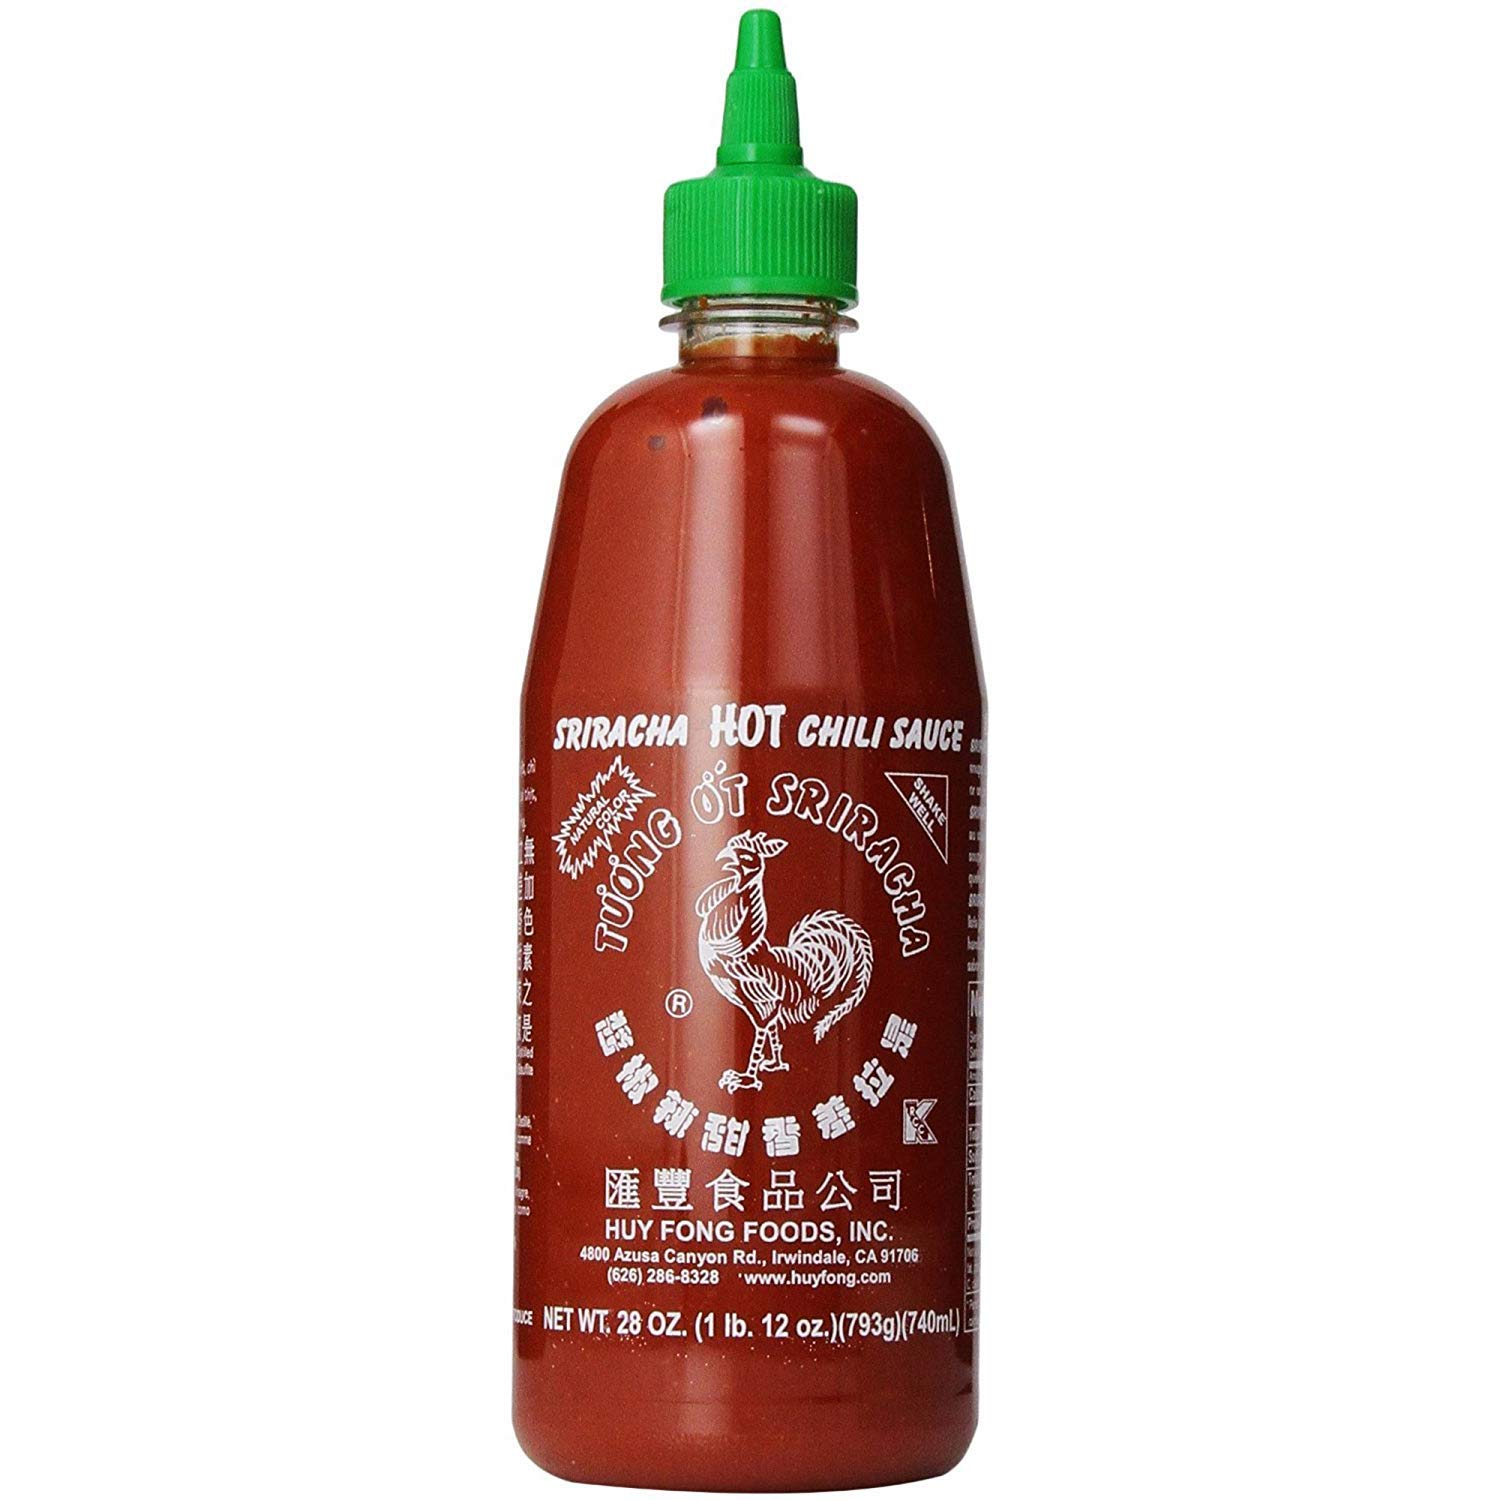 Go-To Hot Sauce: Sriracha and Chili Garlic Sauce